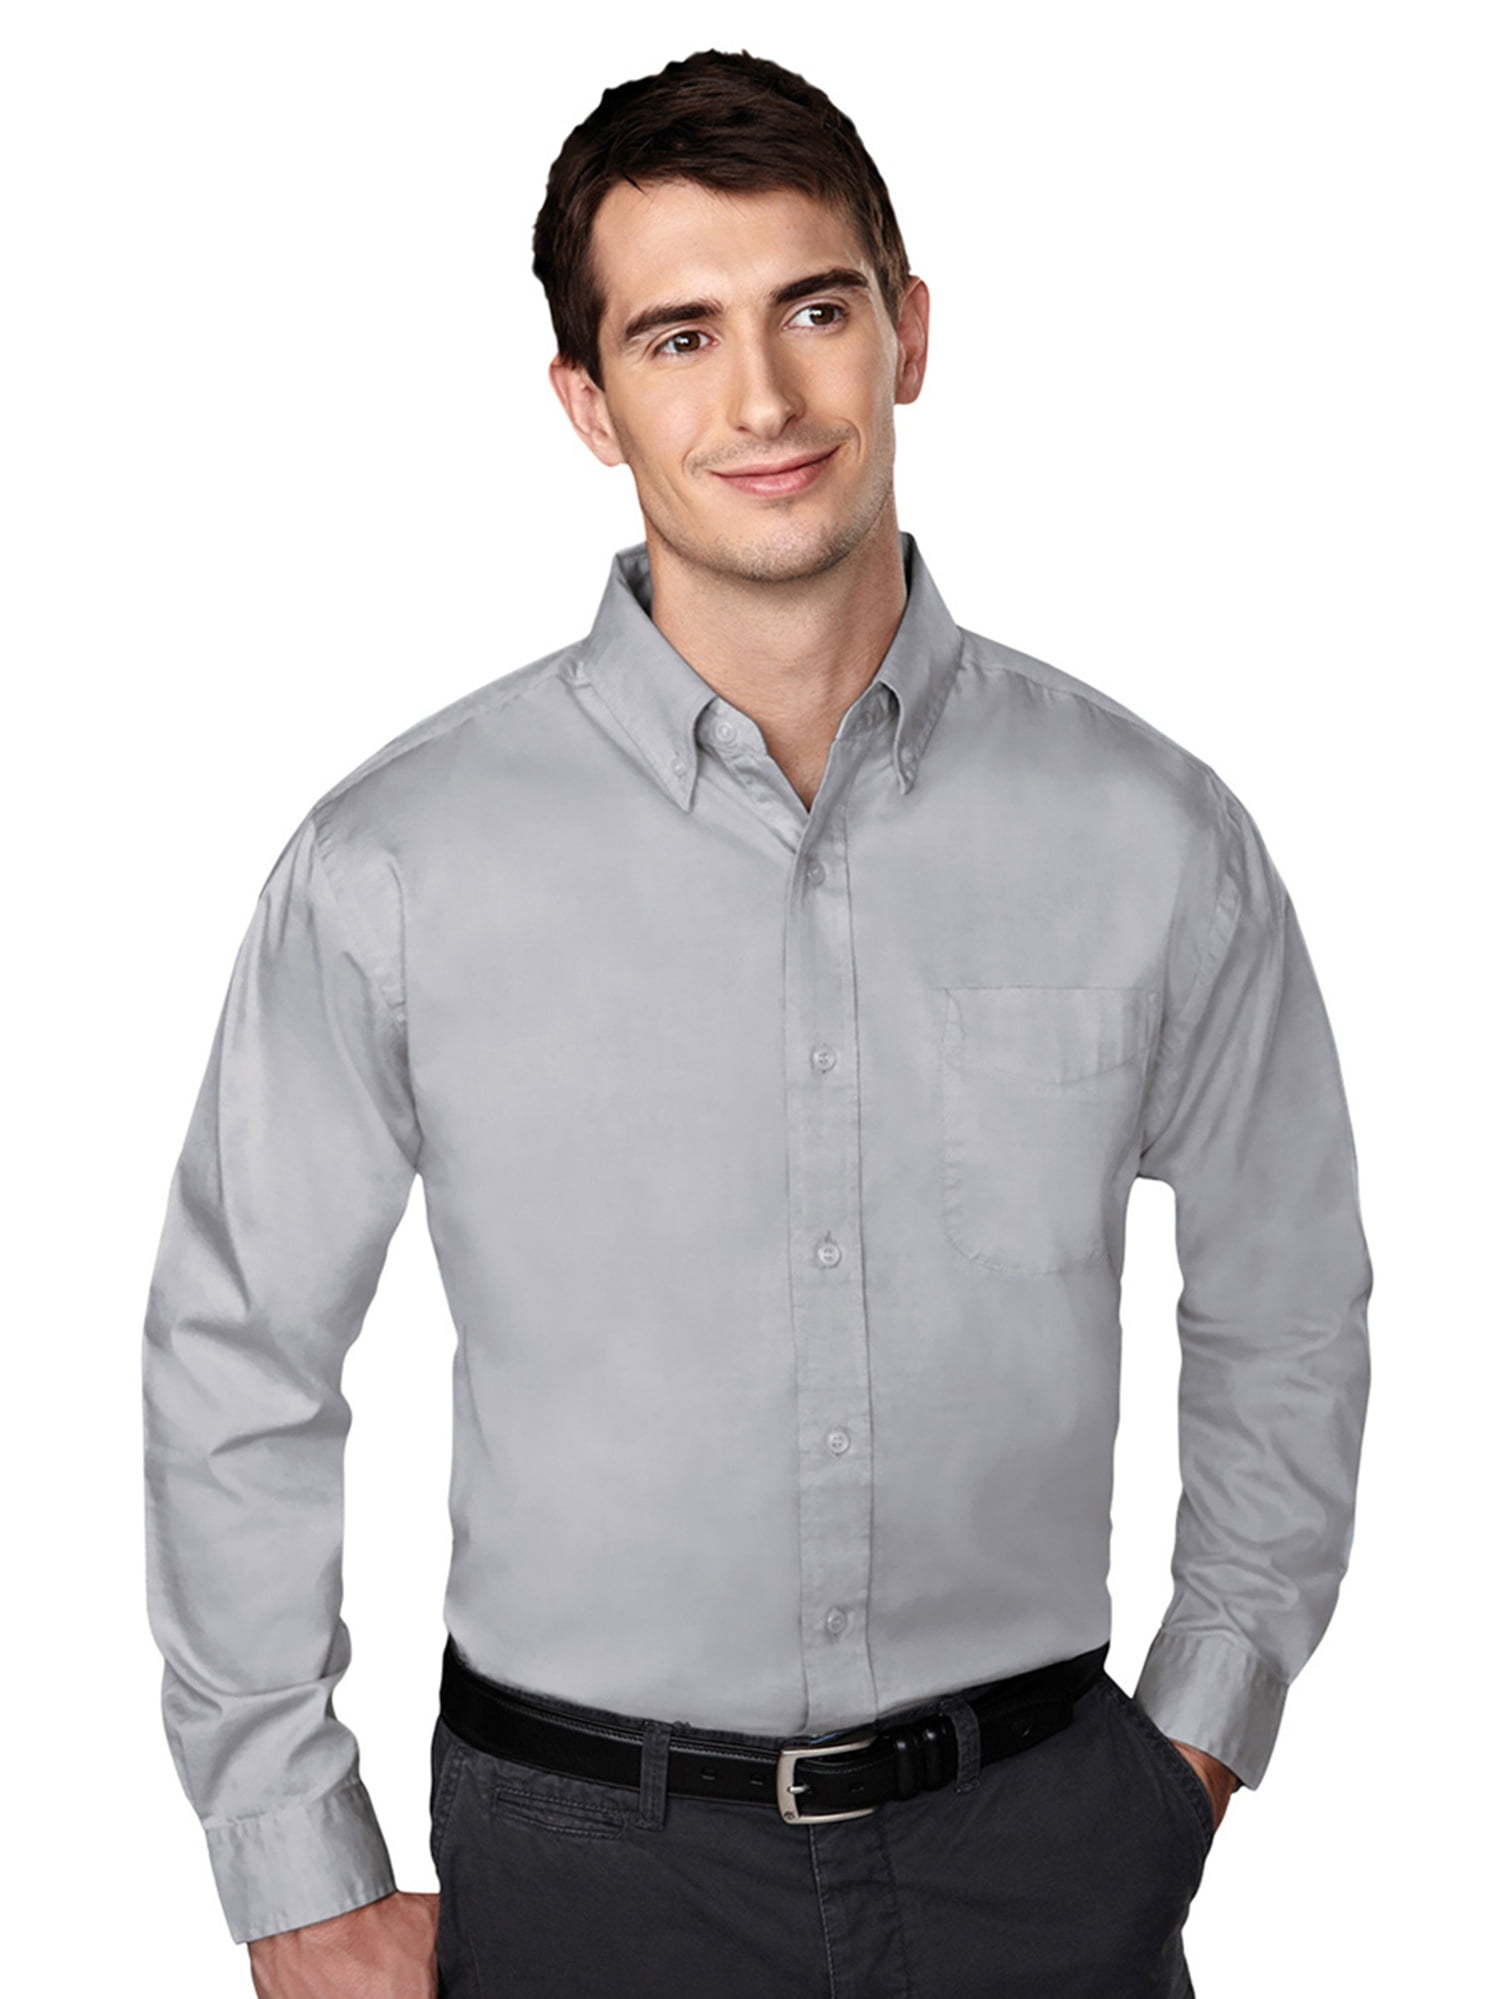 W700LS Tri-Mountain Men's Adjustable Long Sleeve Chest Pocket Twill Dress Shirt